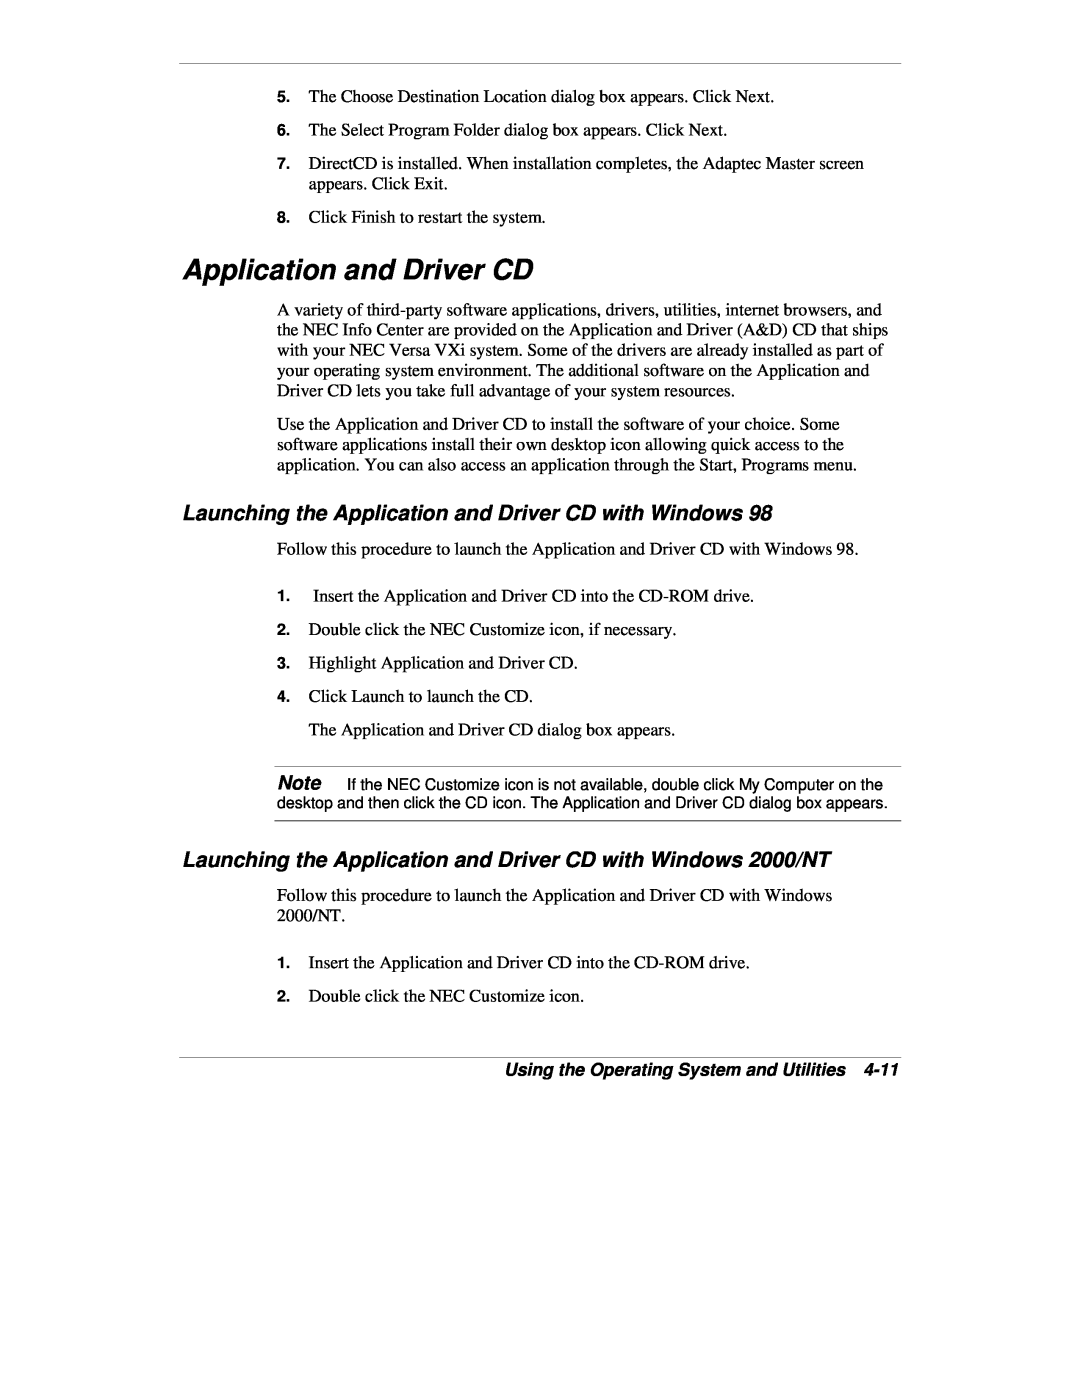 NEC VXi manual Application and Driver CD 